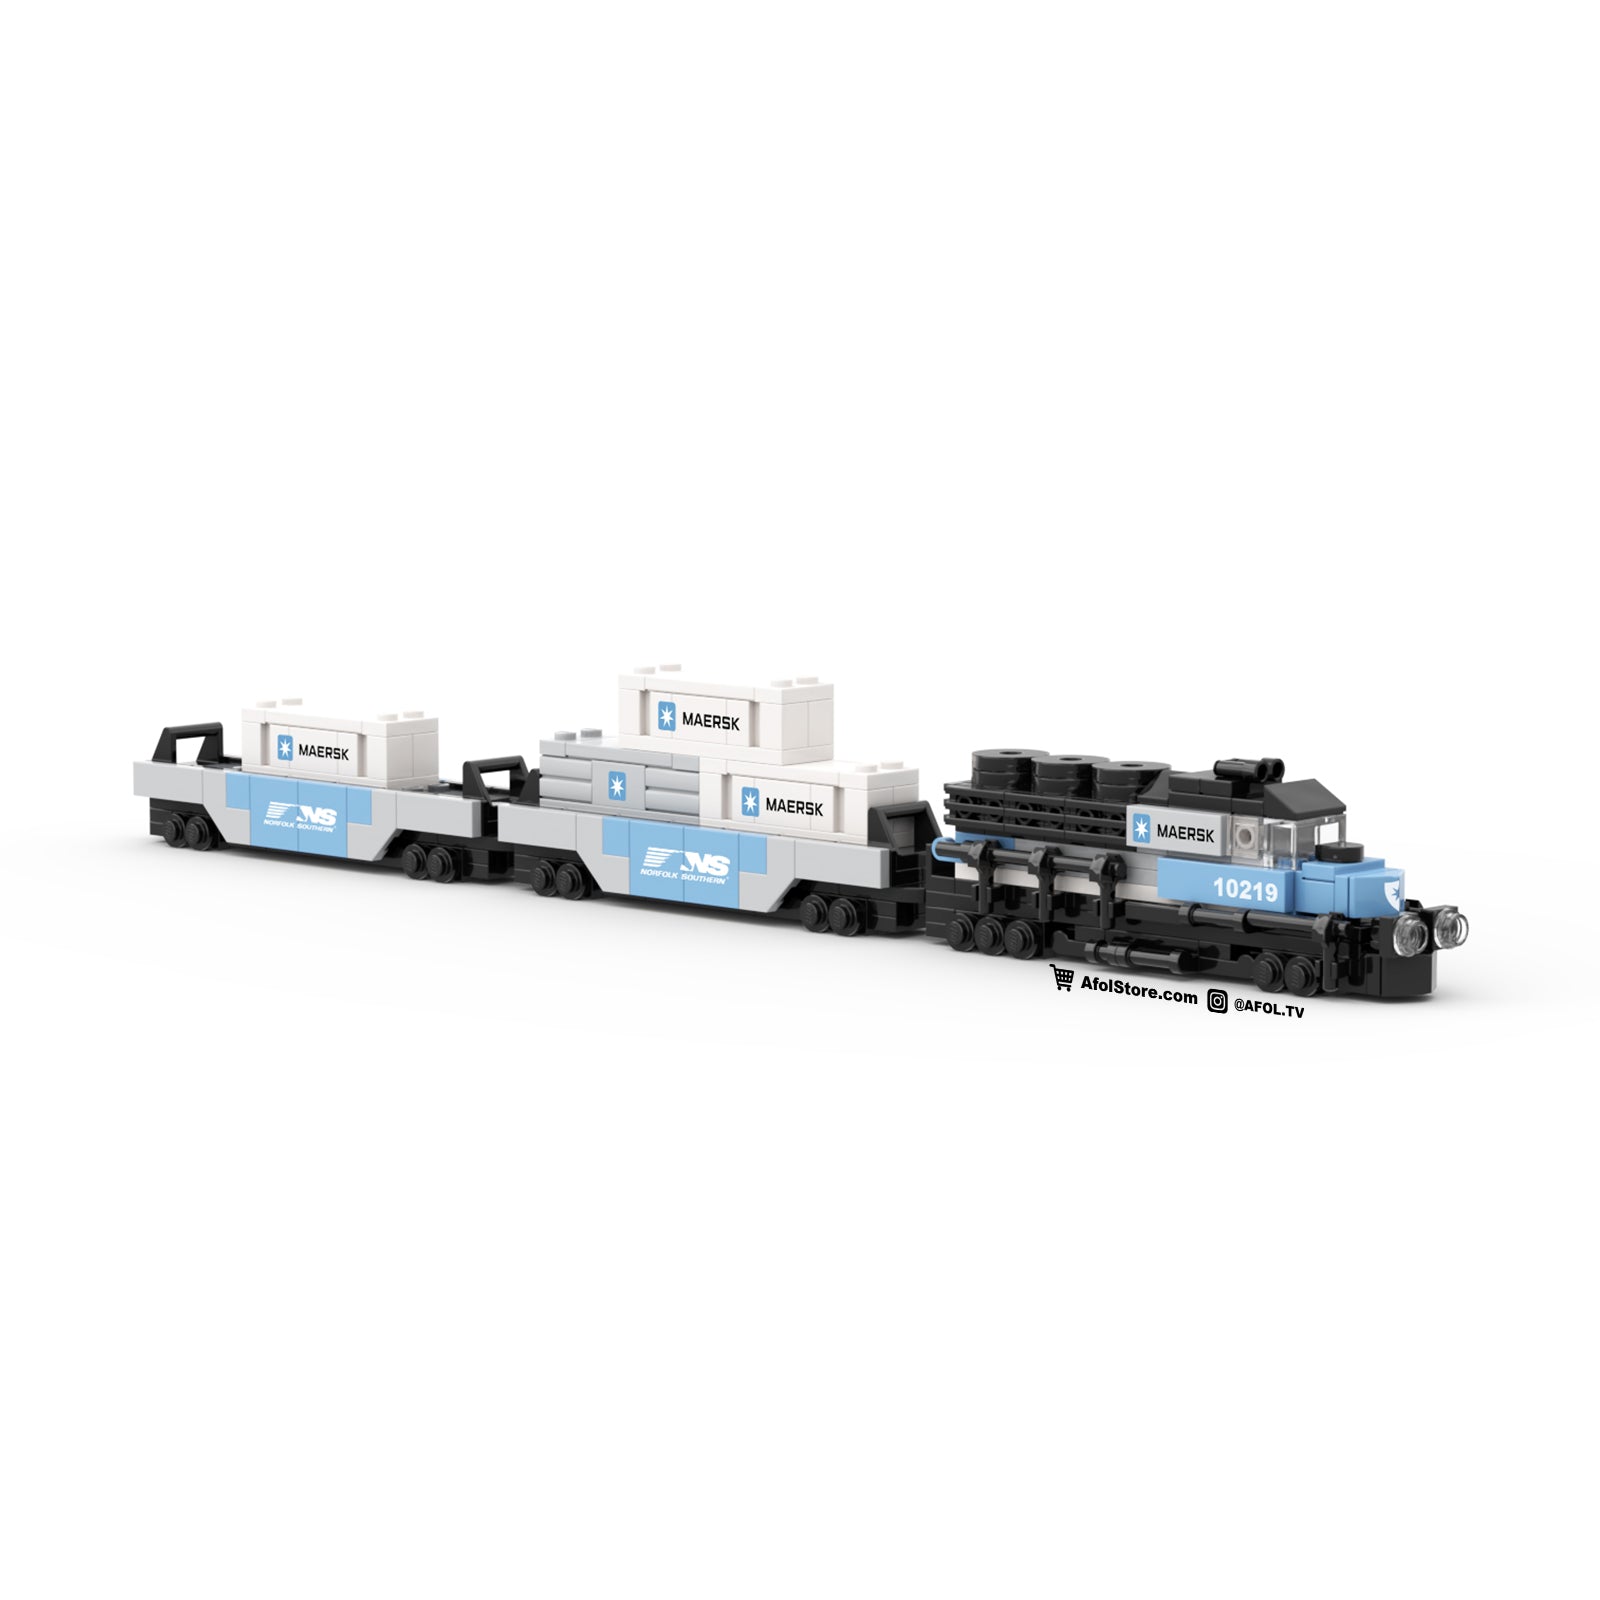 Micro Maersk Train Instructions – AFOL